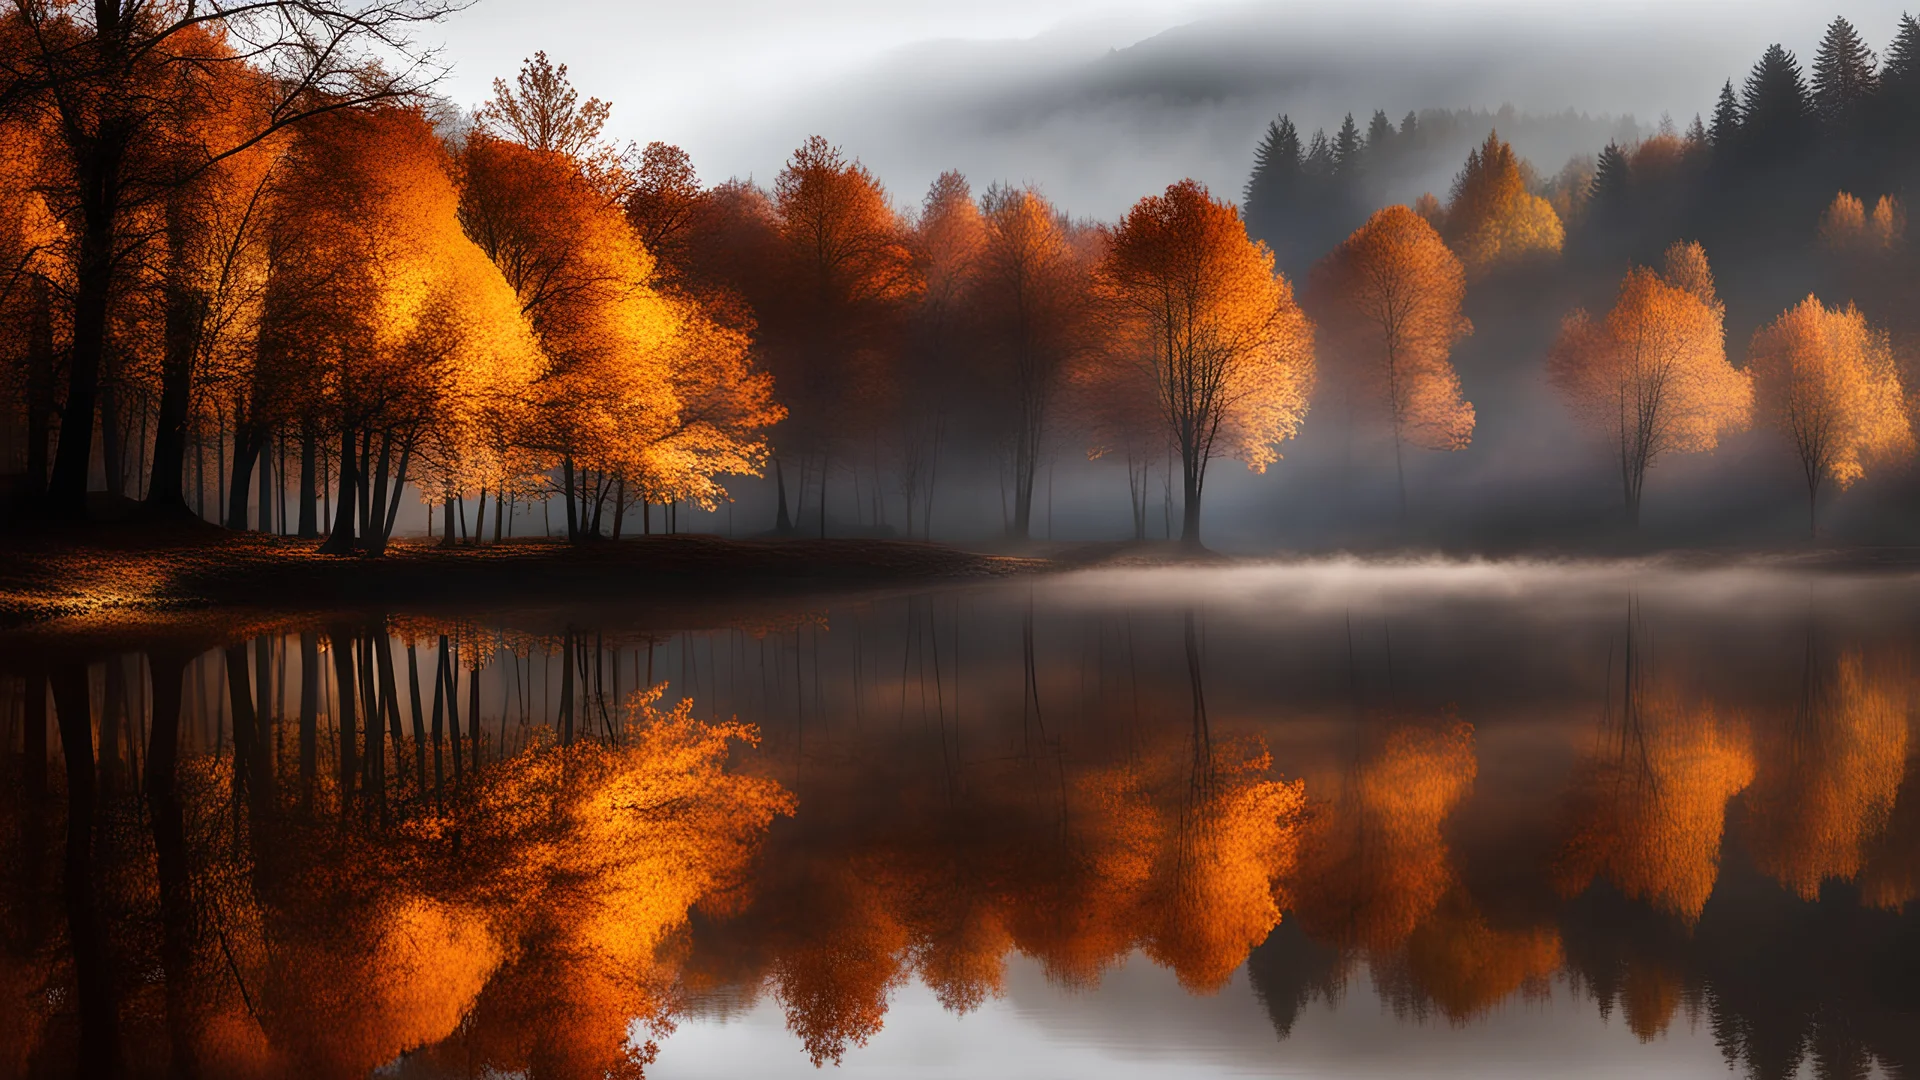 mist shadows,autumn season,brown colors,reflections,dramatic scene